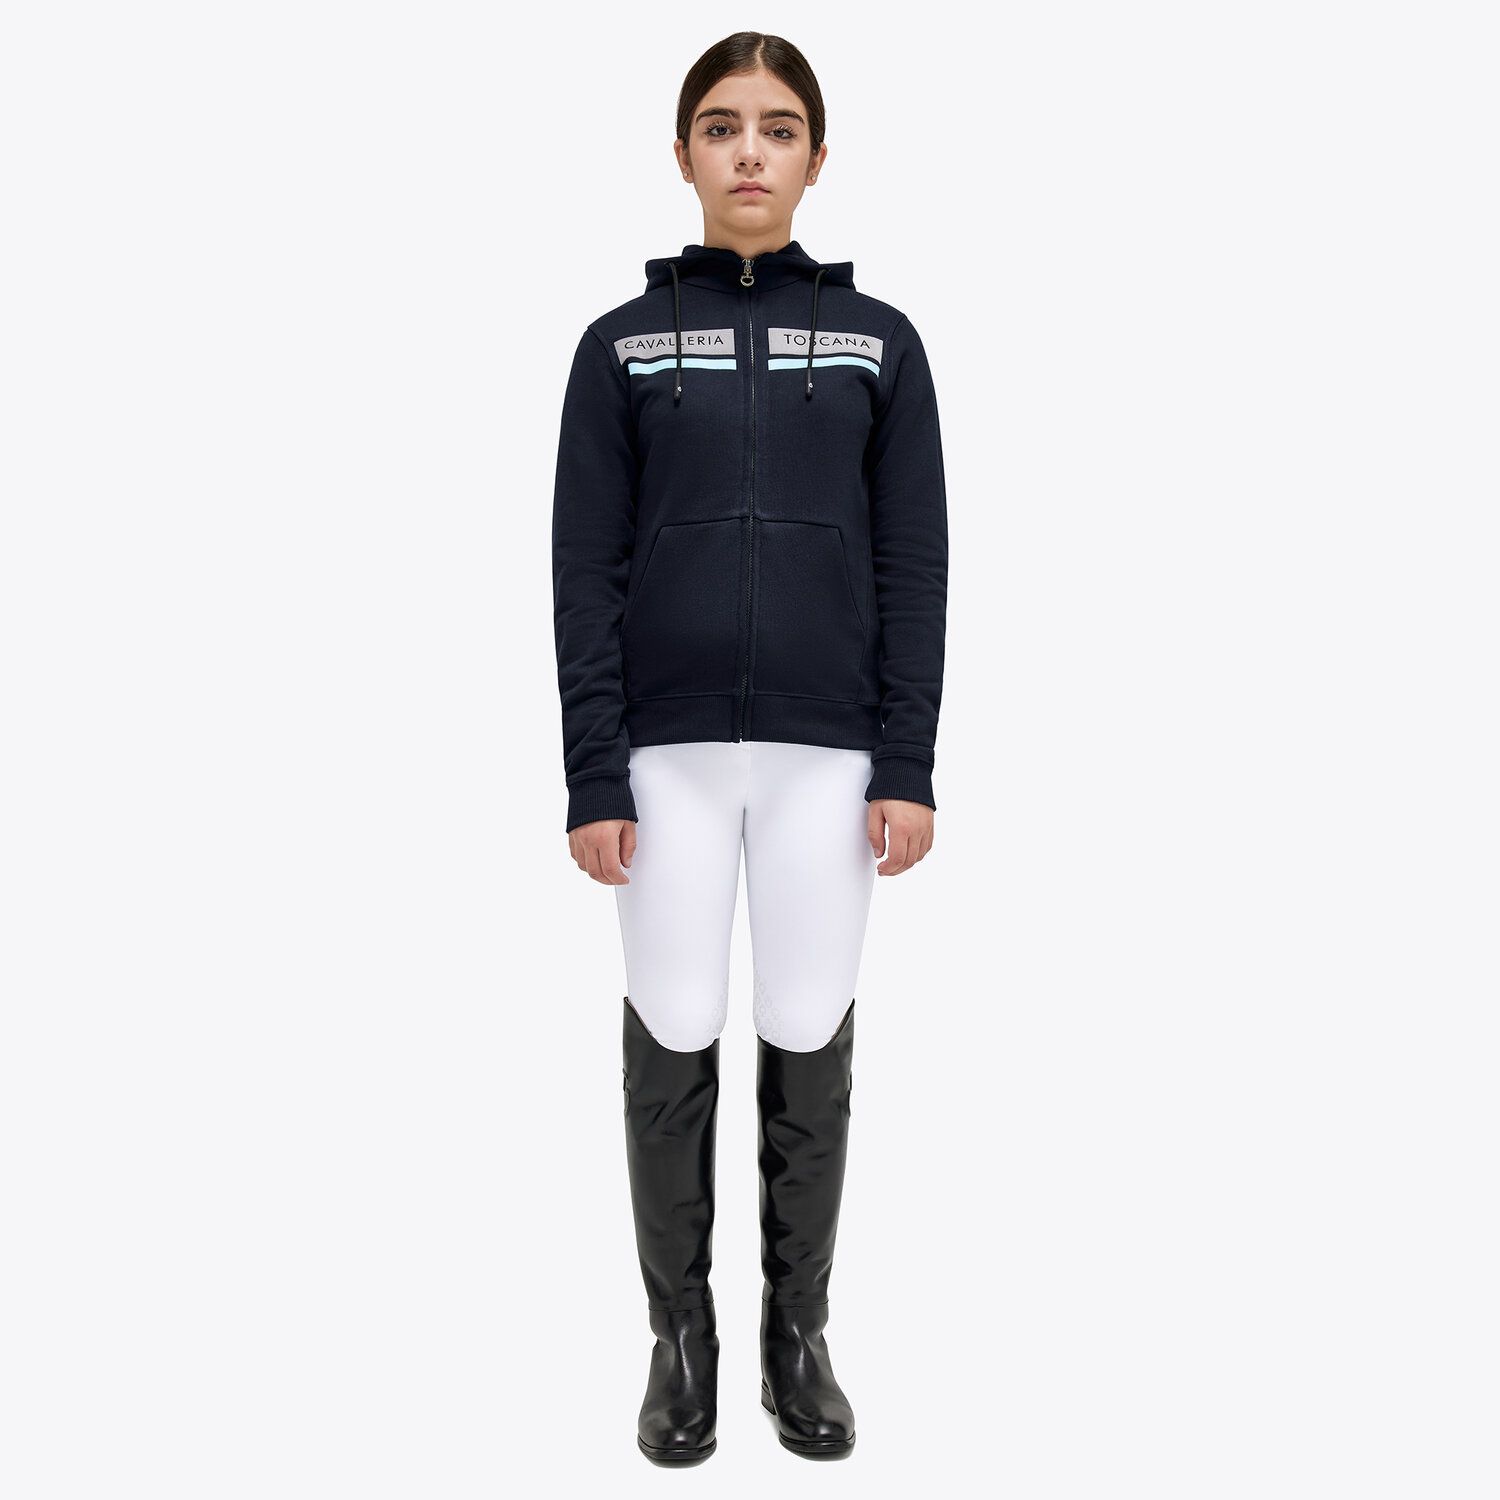 Cavalleria Toscana Girls’ cotton sweatshirt with a flocked print NAVY-1